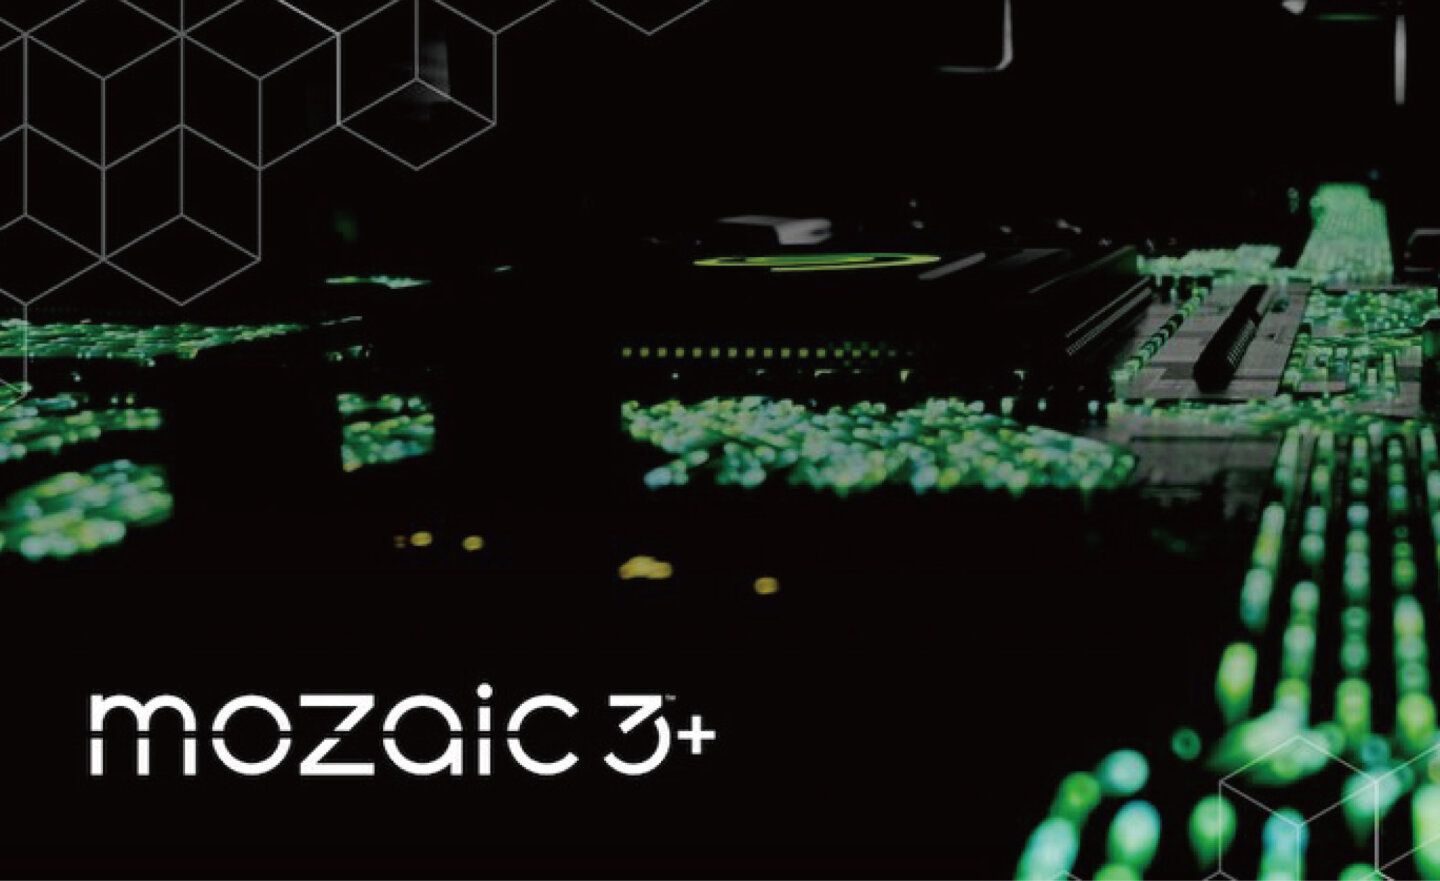 Seagate 專注增加磁錄密度，打造 Mozaic 3+ 硬碟平台